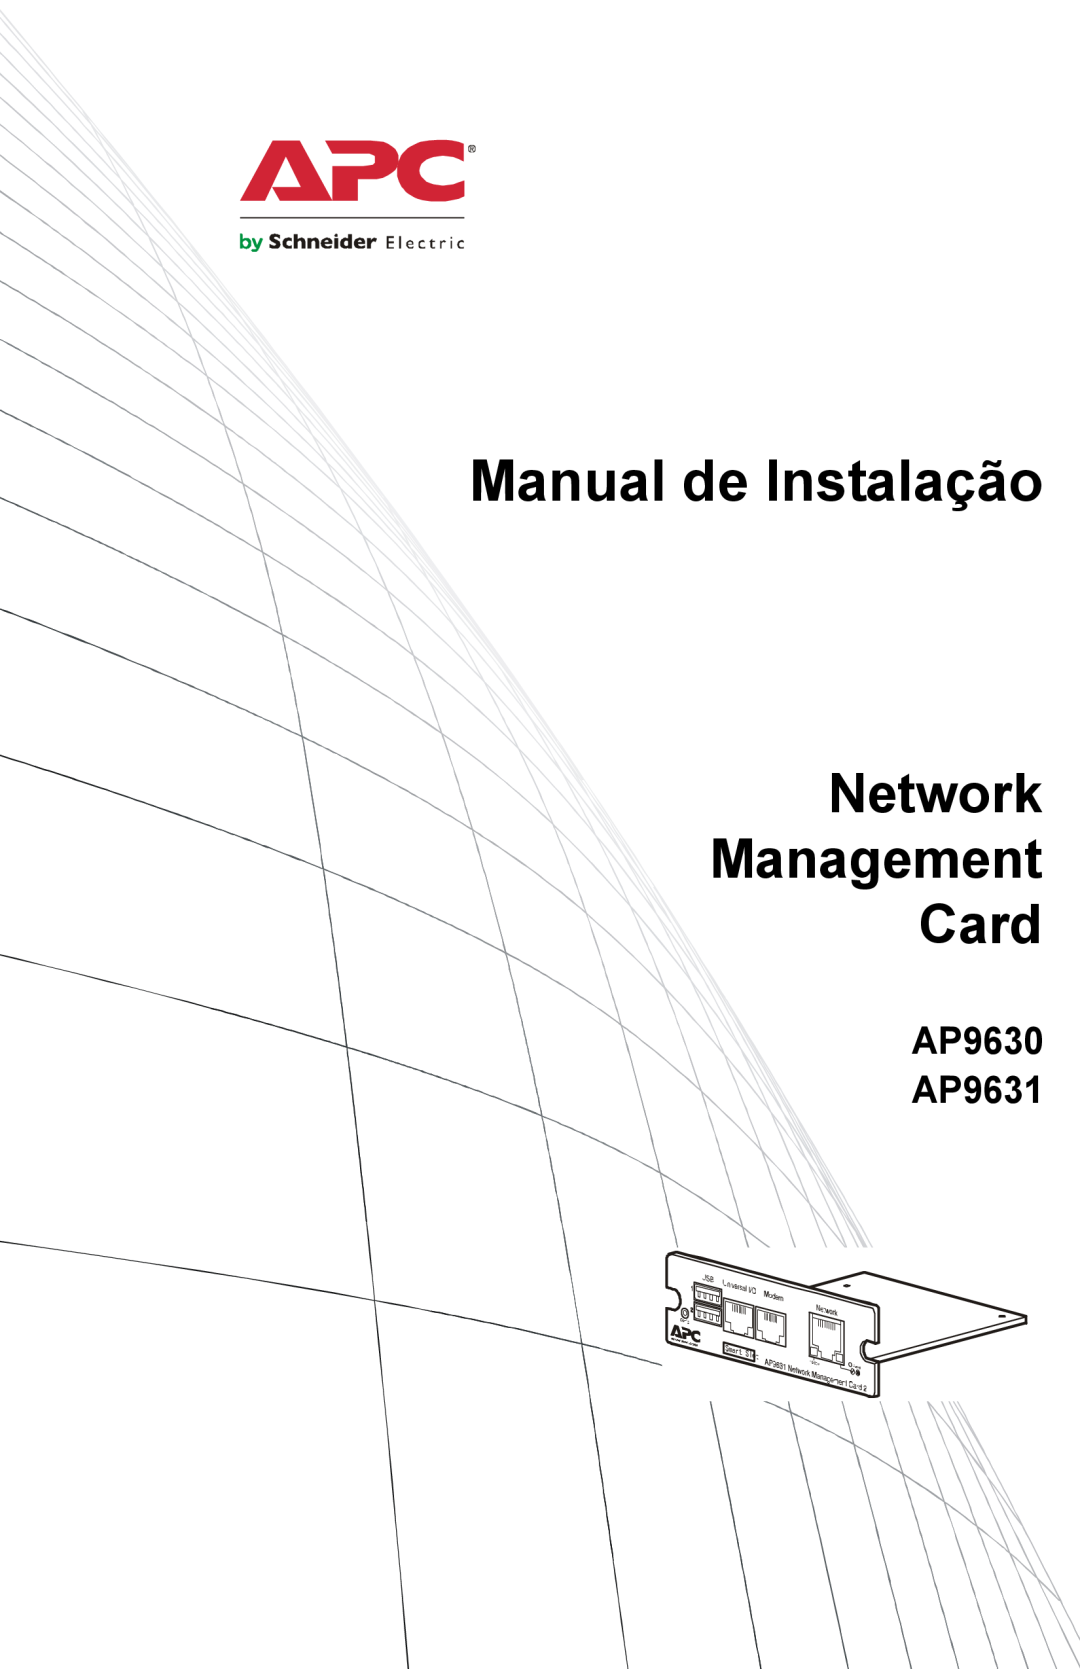 APC manual AP9630 AP9631, Manual de Instalação, Network Management Card 